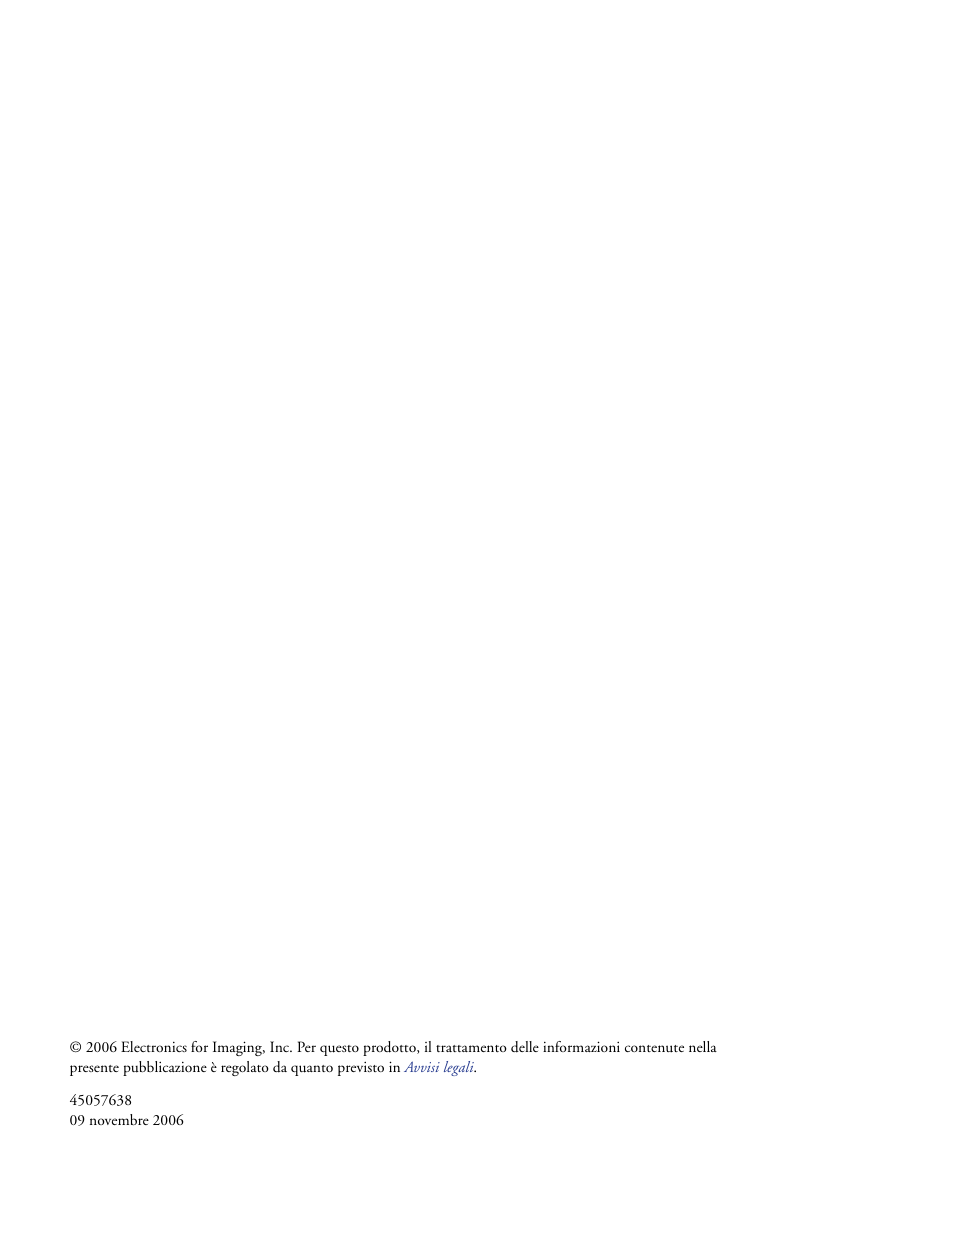 Konica Minolta bizhub PRO C6500P Manuale d'uso | Pagina 2 / 54